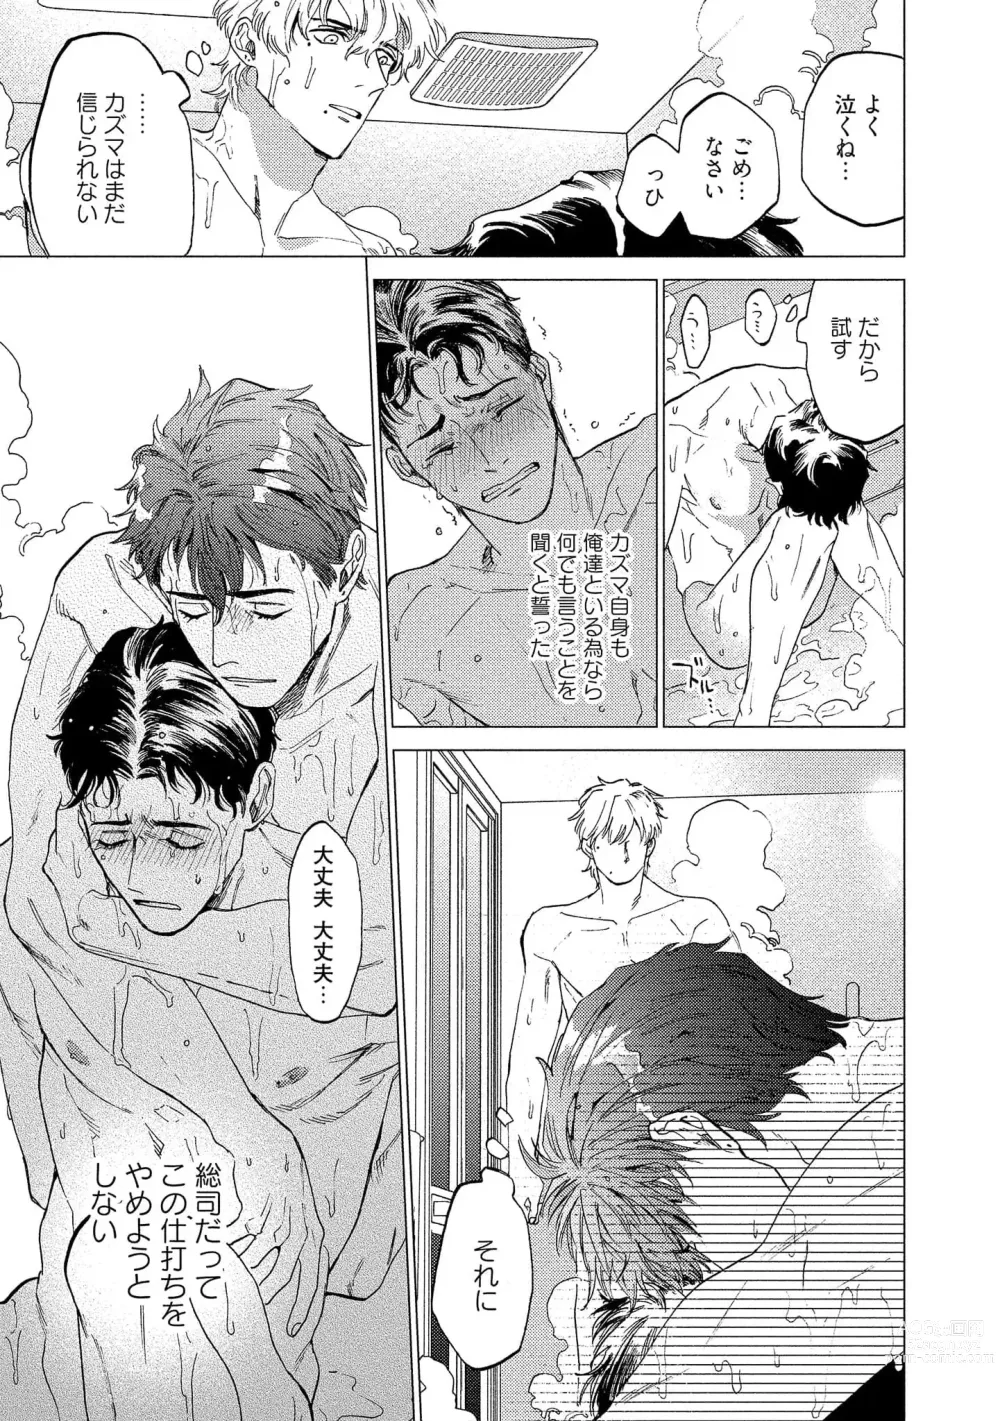 Page 145 of manga Fukushuu ga Tokenai